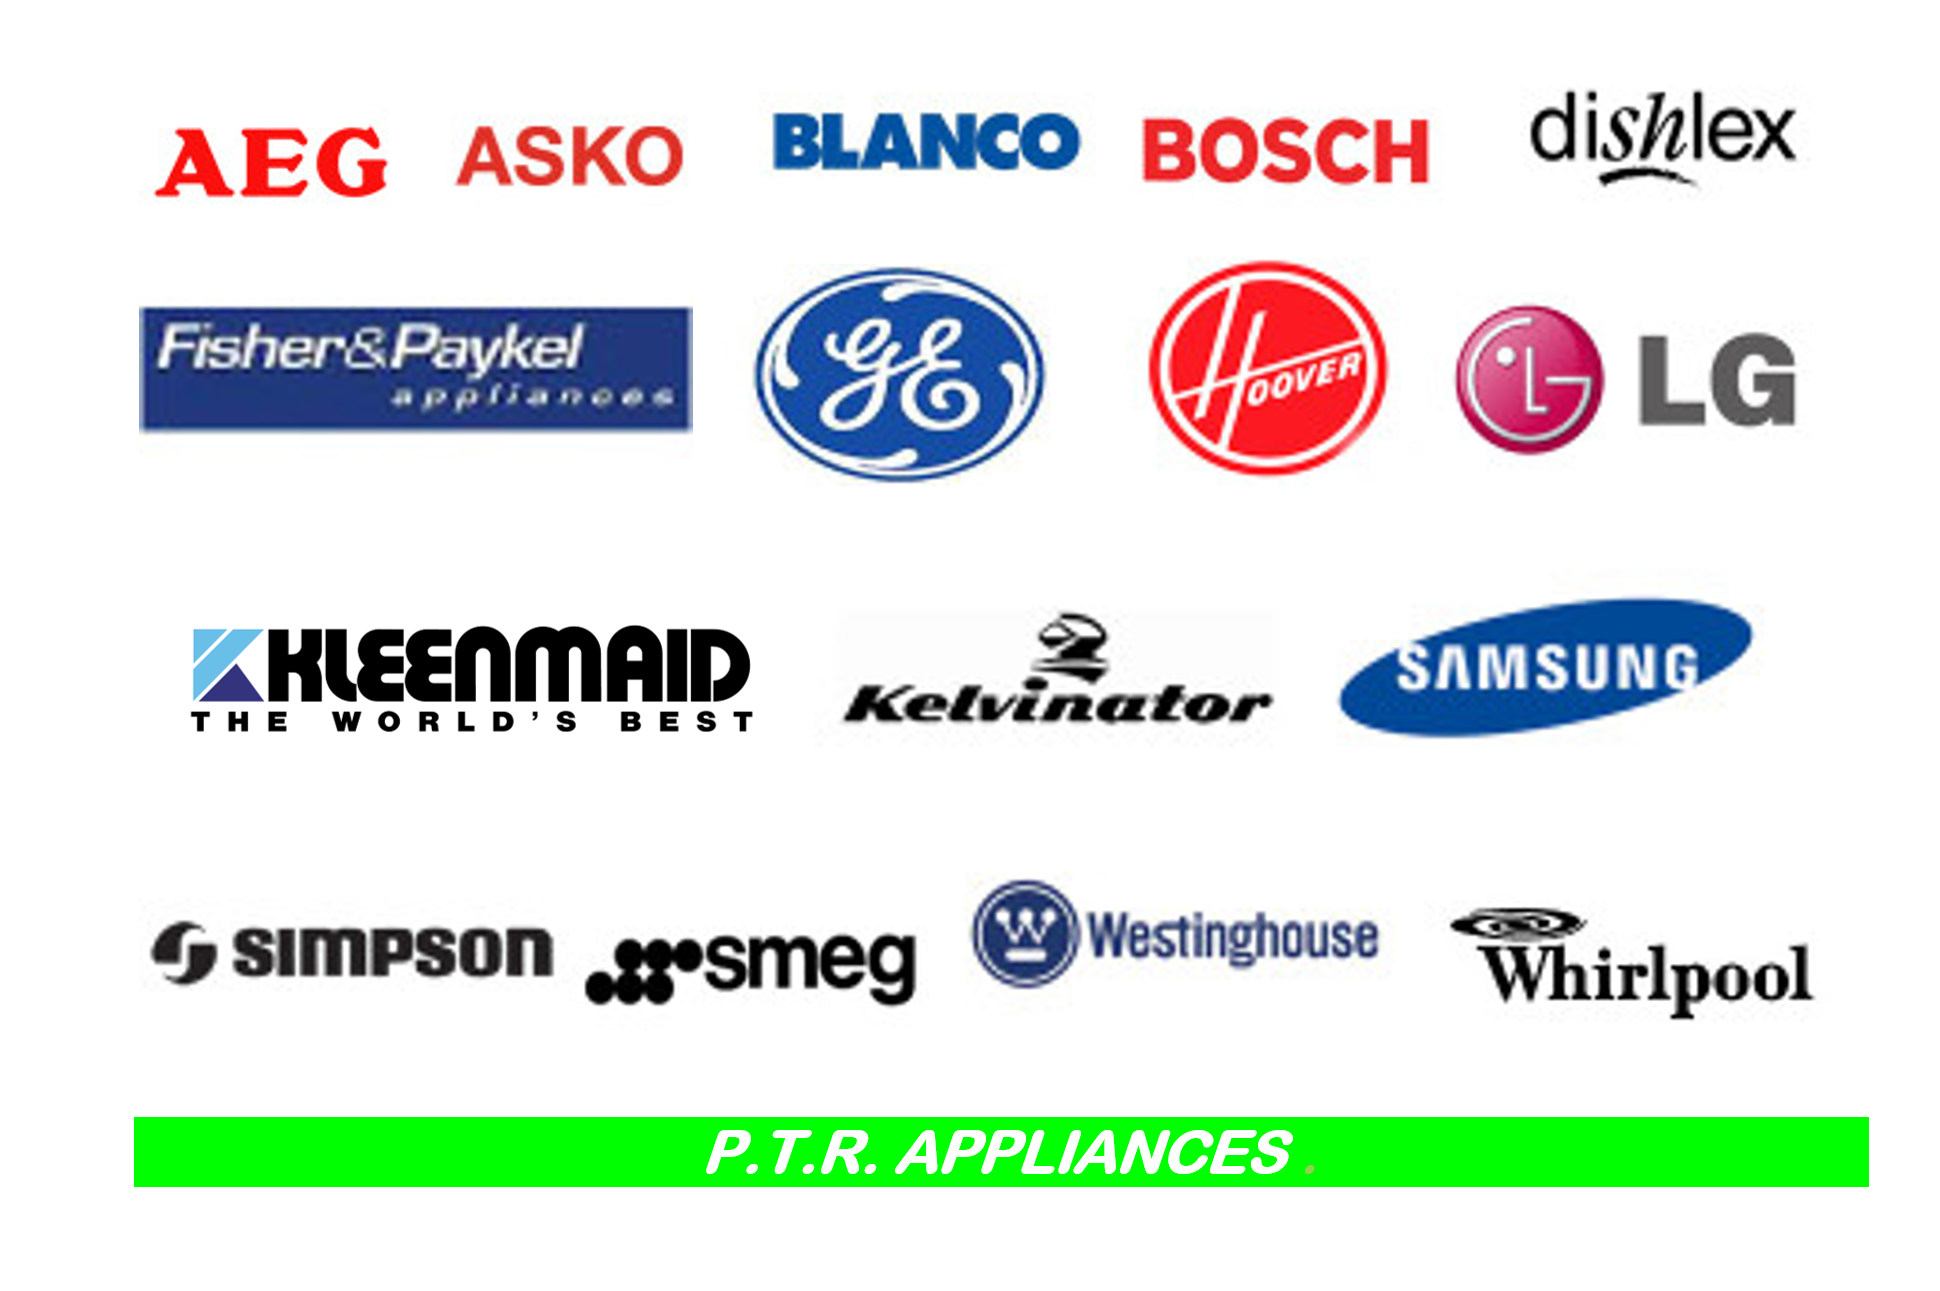 P.T.R Appliances services AEG, Asko, Blanko, Bosch, Dishlex, Fisher & Paykel, GE, Hoover, LG, Kleenmaid, Kelvinator, Samsung, Simpson, Smeg, Westinghouse, Whirlpool